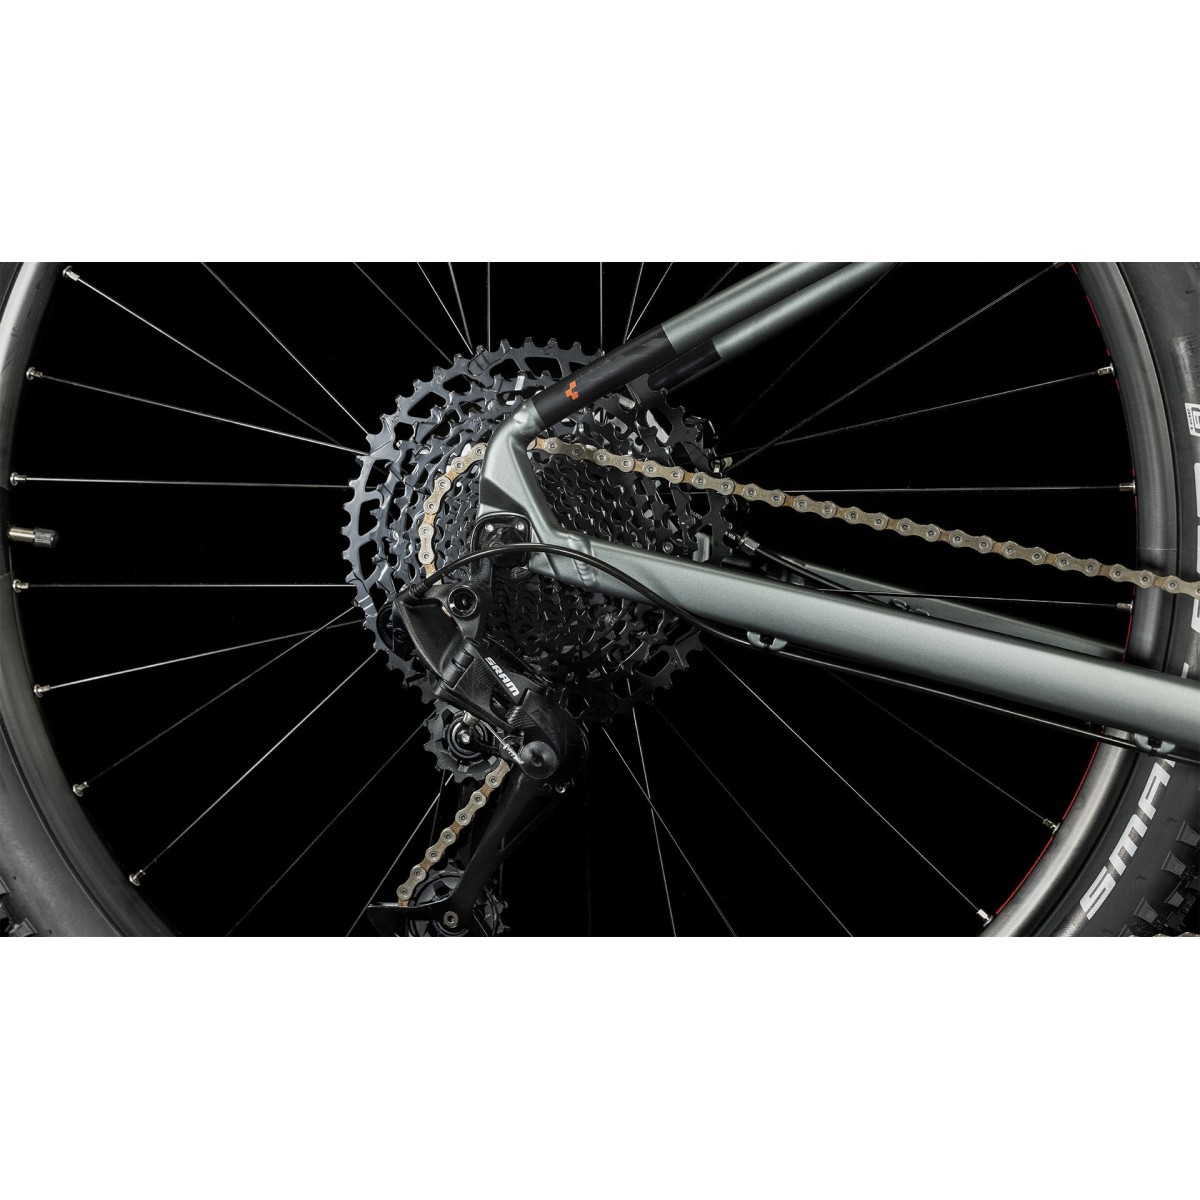 CUBE ANALOG 29 kalnu velosipēds - flashgrey/red - 2023